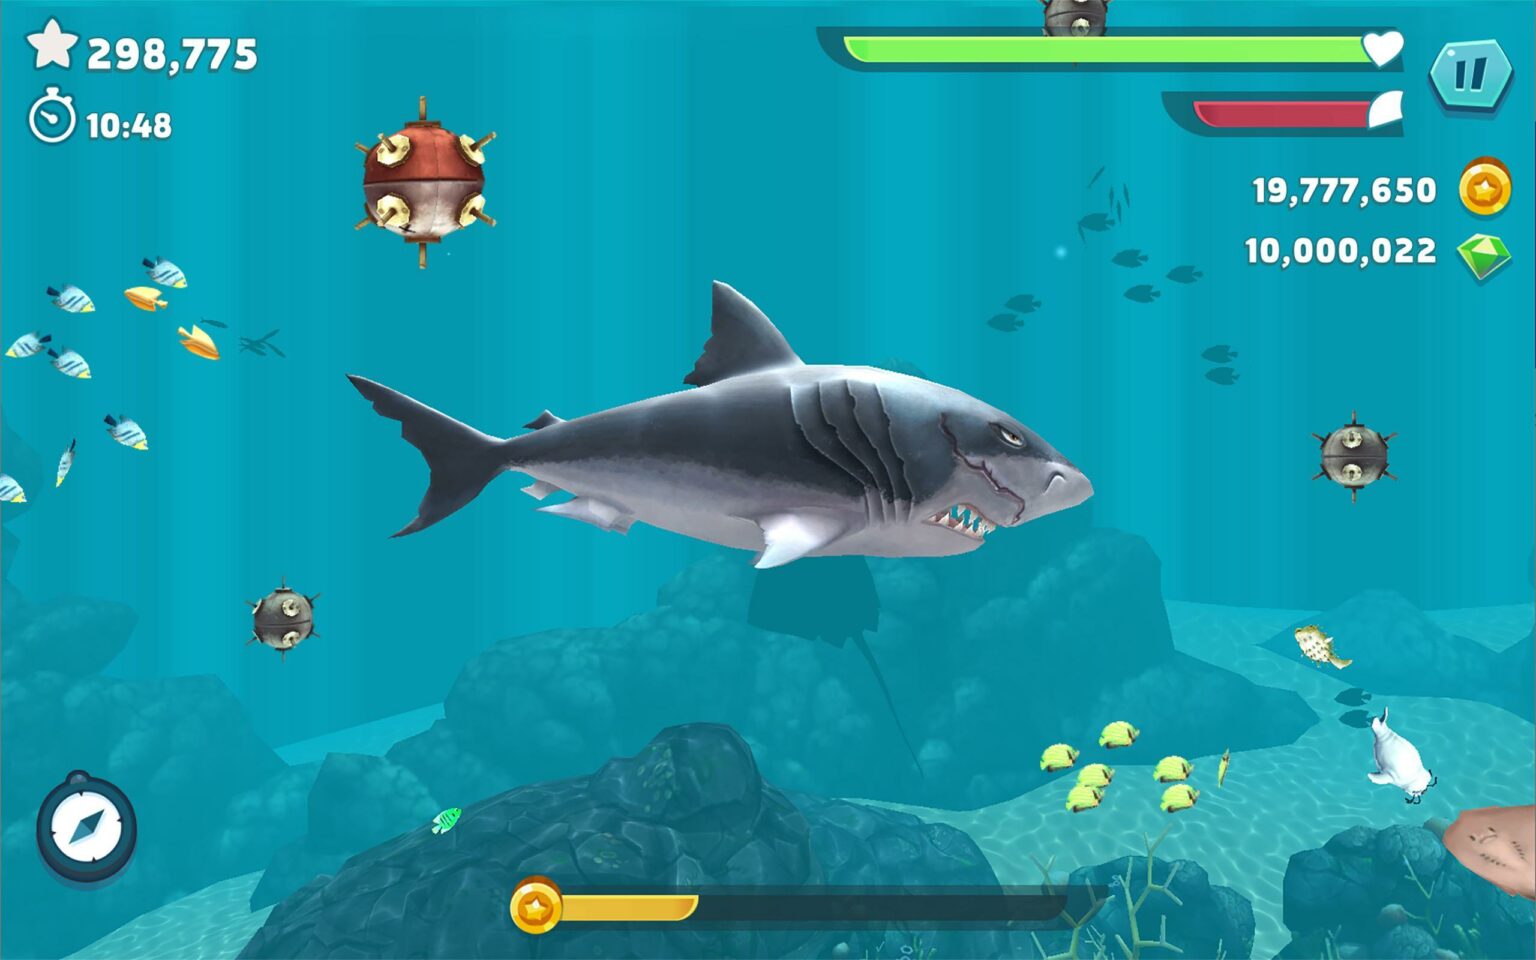 Взломанный hungry shark world